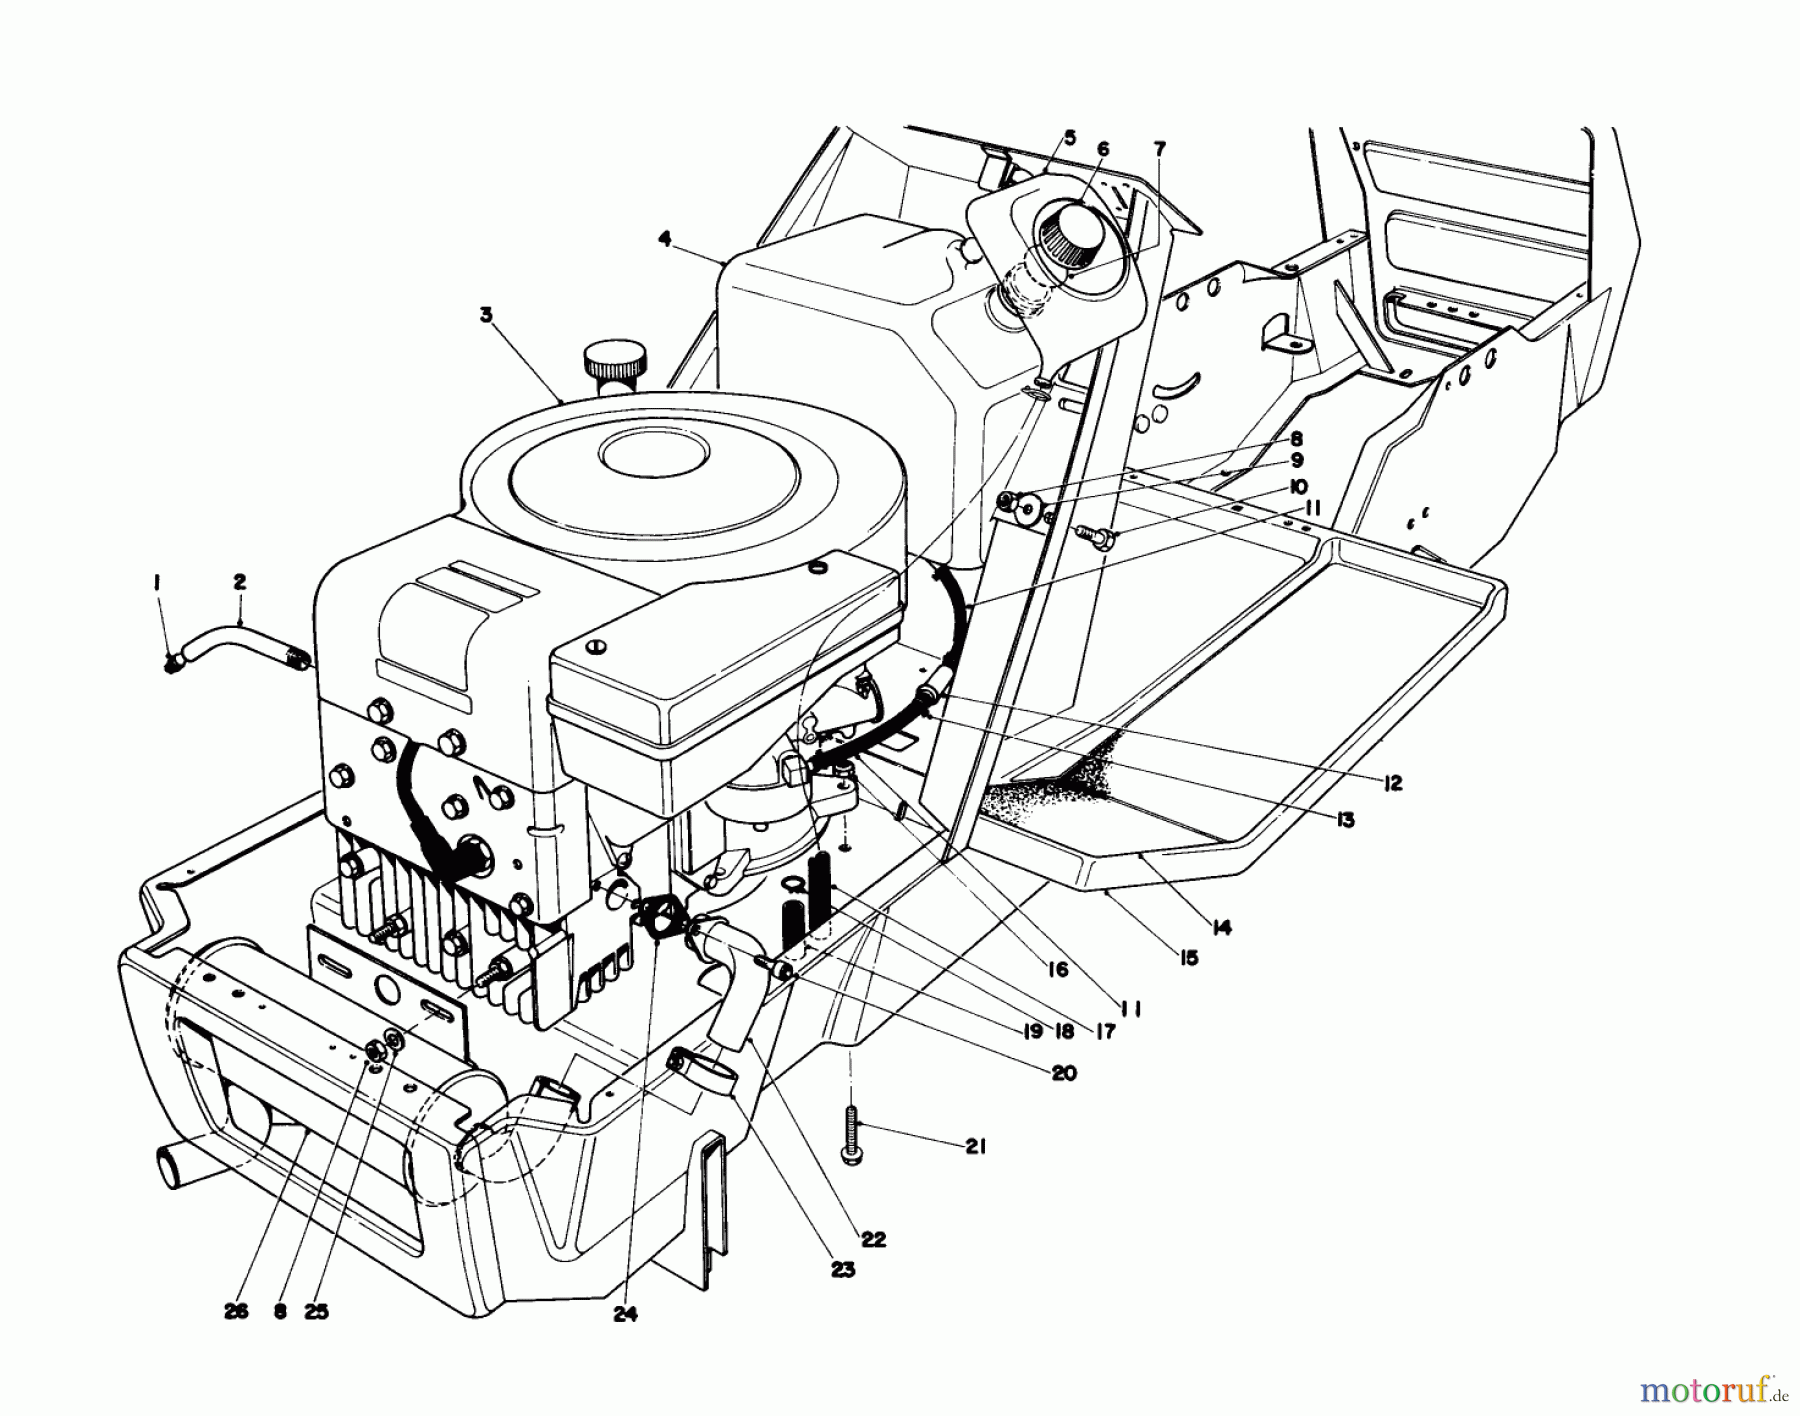  Toro Neu Mowers, Lawn & Garden Tractor Seite 1 57300 (8-32) - Toro 8-32 Front Engine Rider, 1978 (8000001-8999999) ENGINE ASSEMBLY MODEL 57300